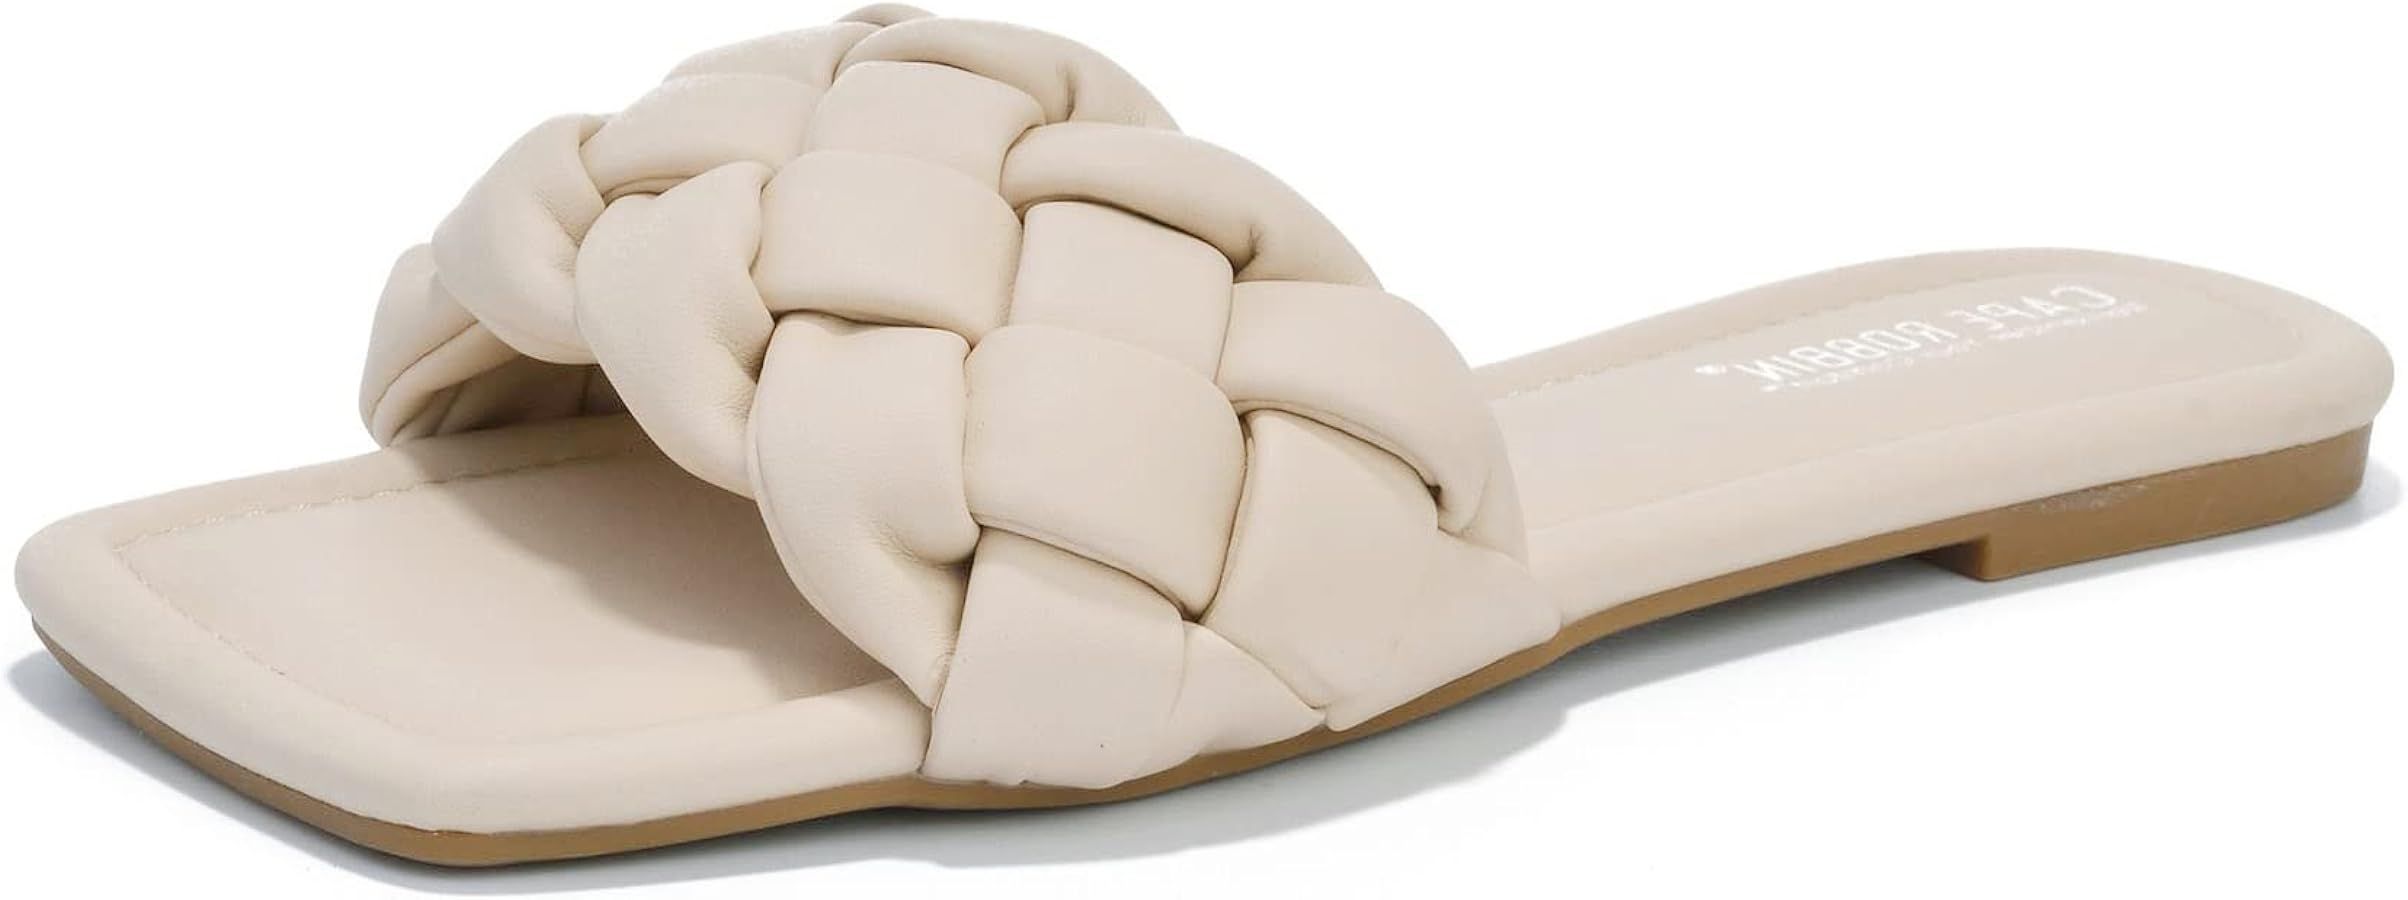 Cape Robbin Vagabond Sandals Women - Square Toe Sandals - Flat Braided Sandals for Women - Woven ... | Amazon (US)